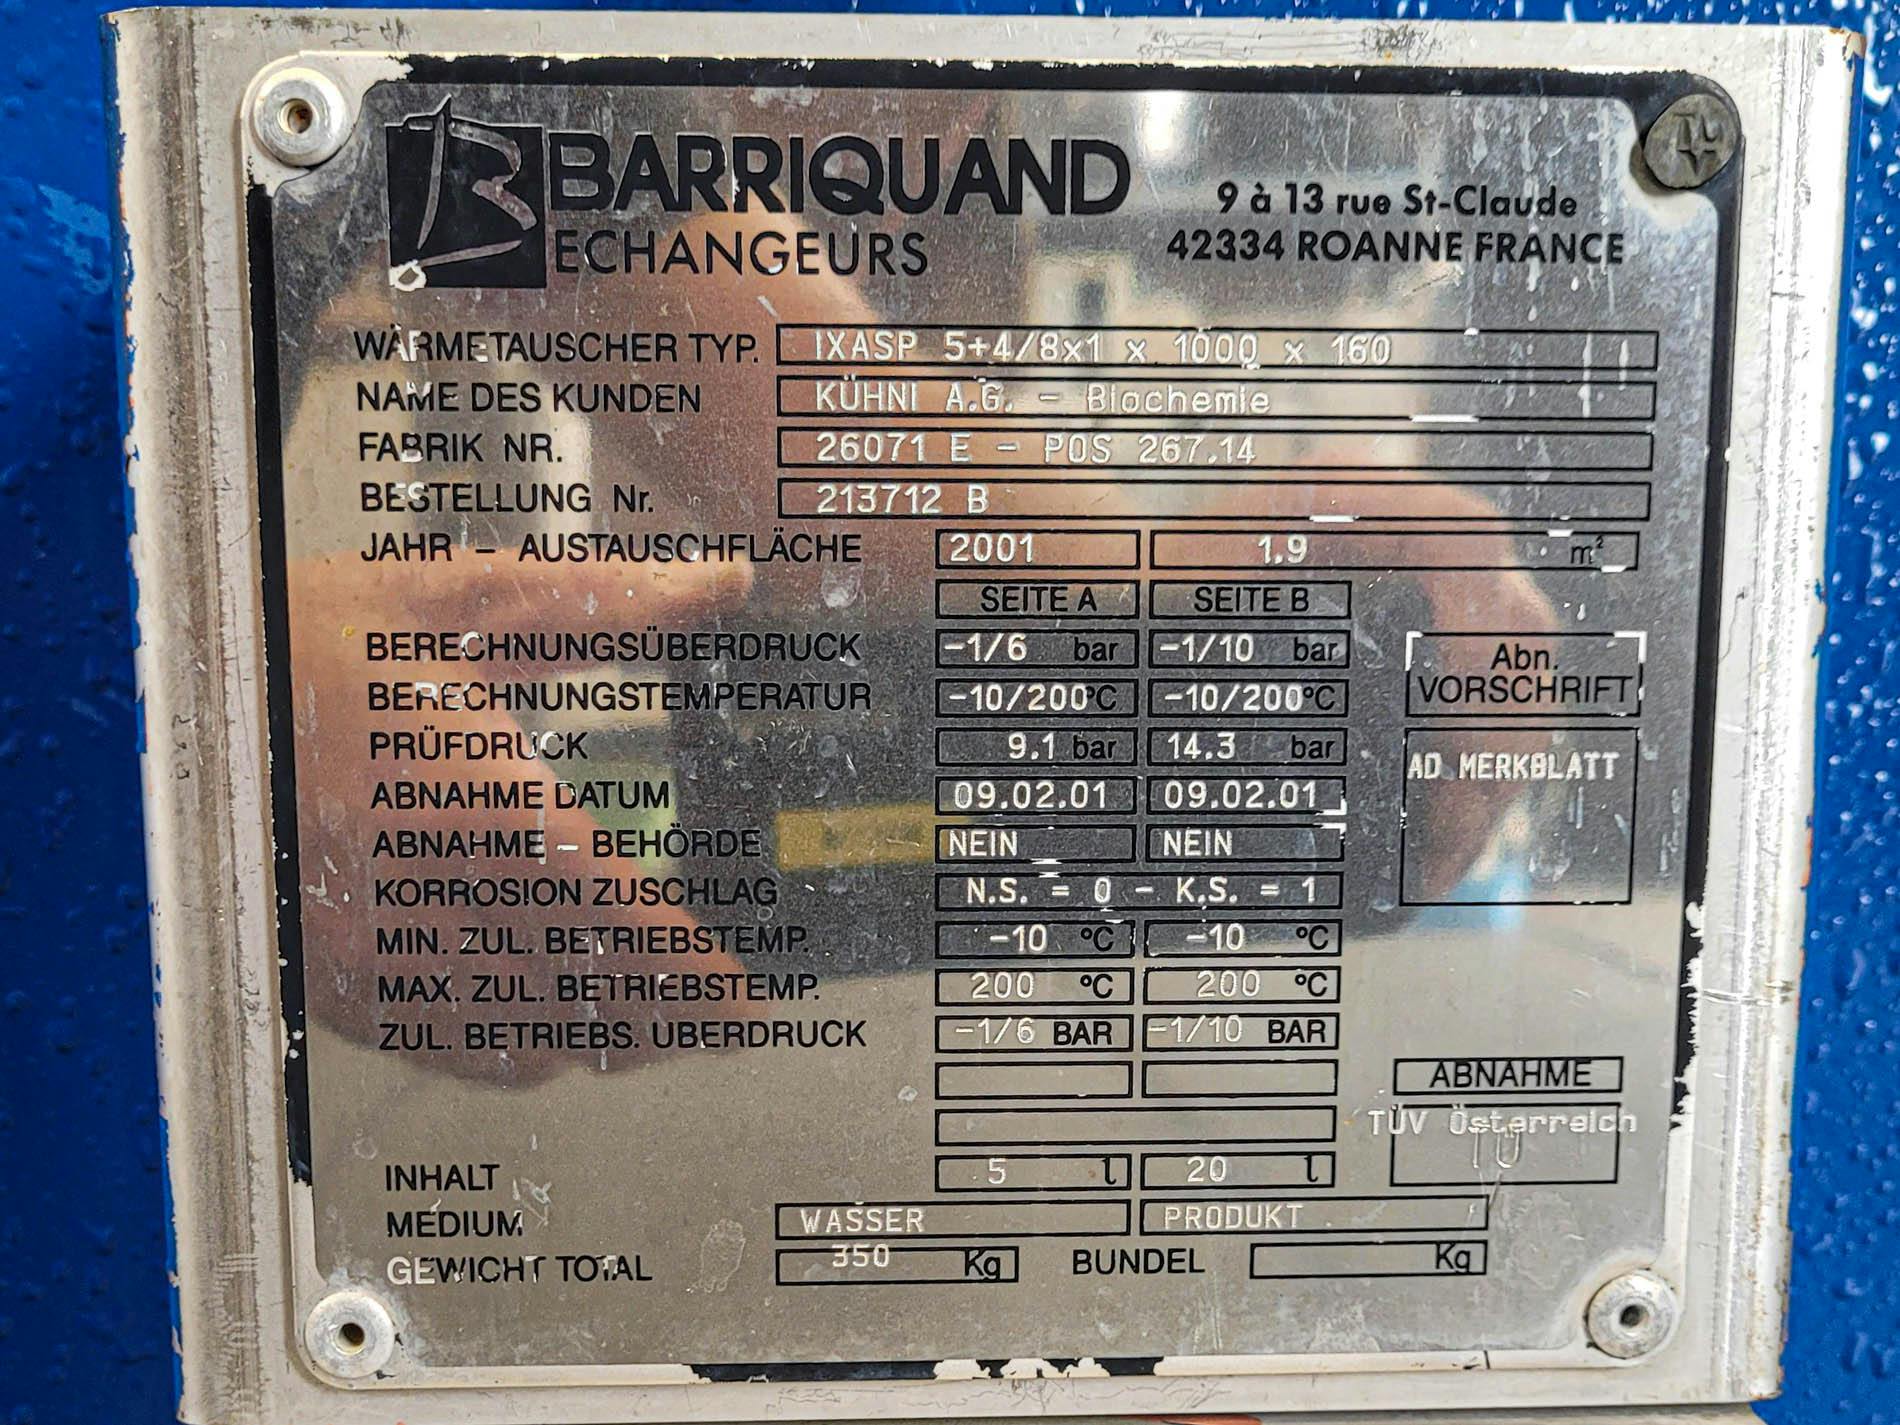 Barriquand IXAP 5+4/8x1 x 1000 x 160 - 1,9 m² - Intercambiador de calor de placas - image 9